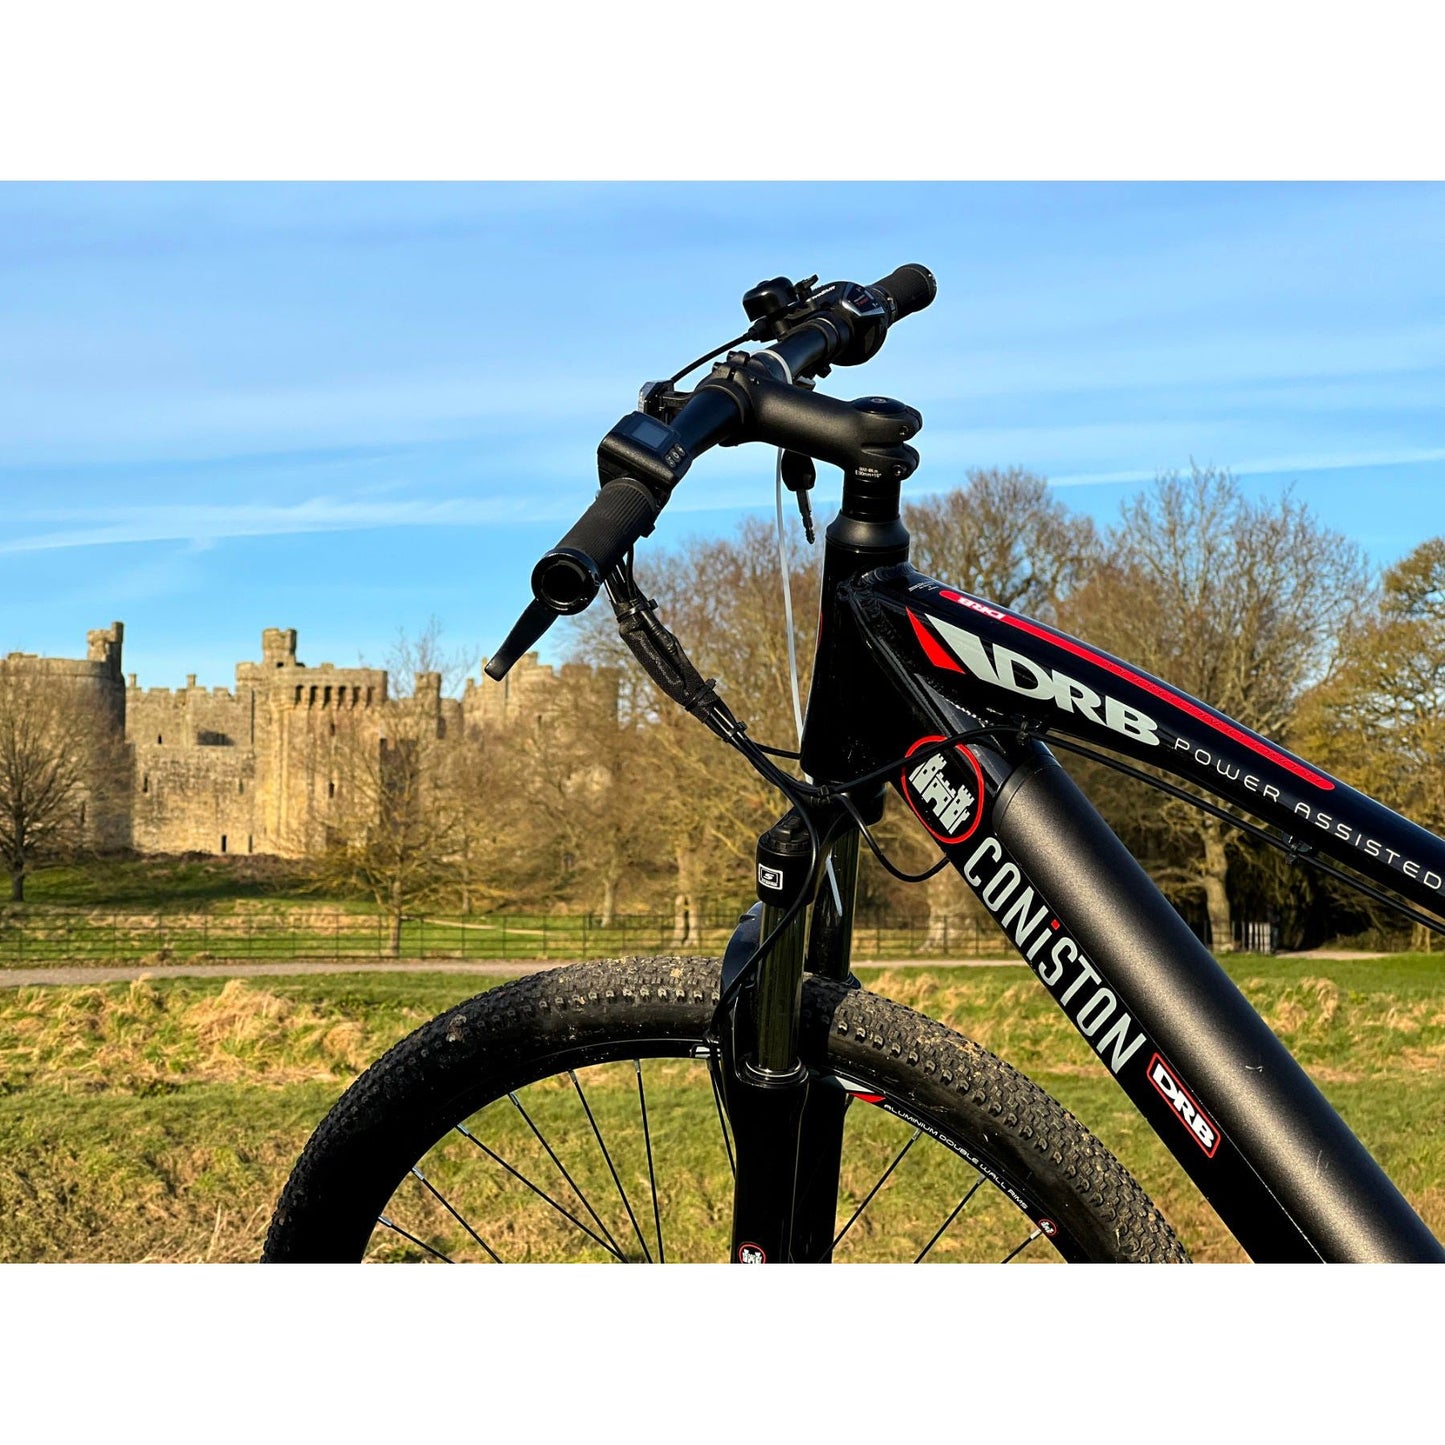 Dallingridge Coniston Hardtail Electric Mountain Bike - Black/Red